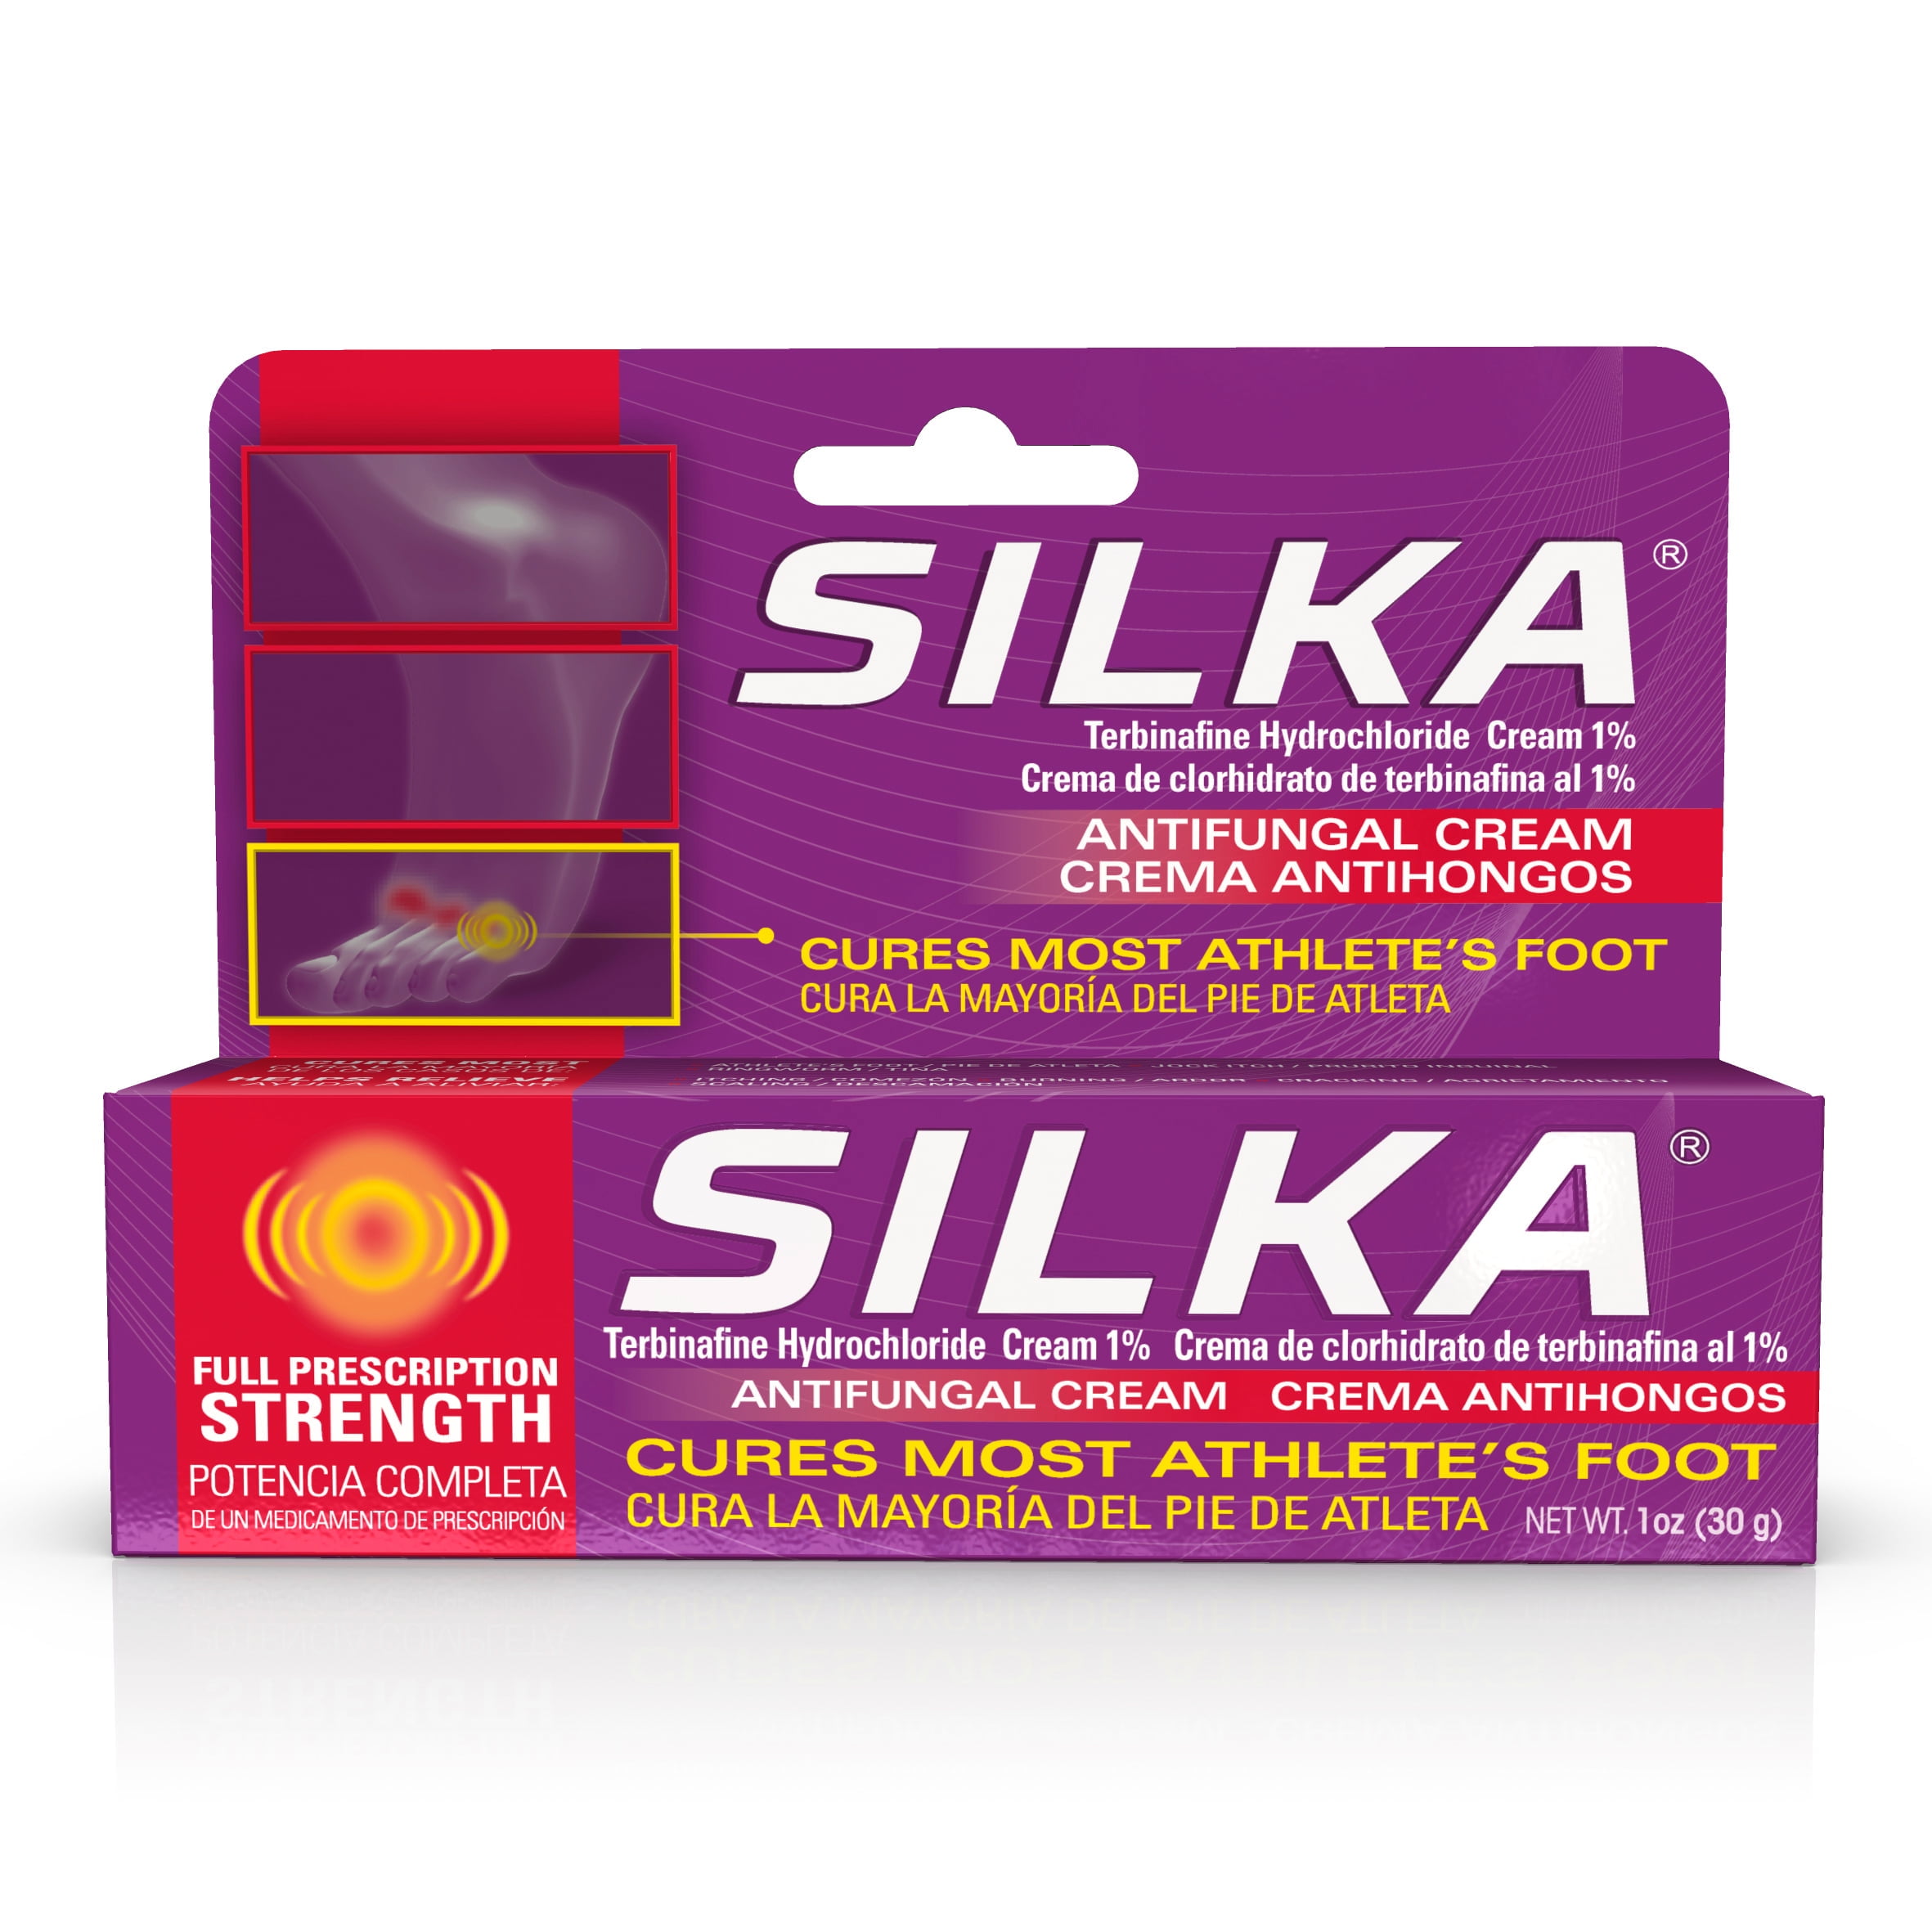 Silka Athlete's Foot Prescription Strength Antifungal Cream, 1 oz